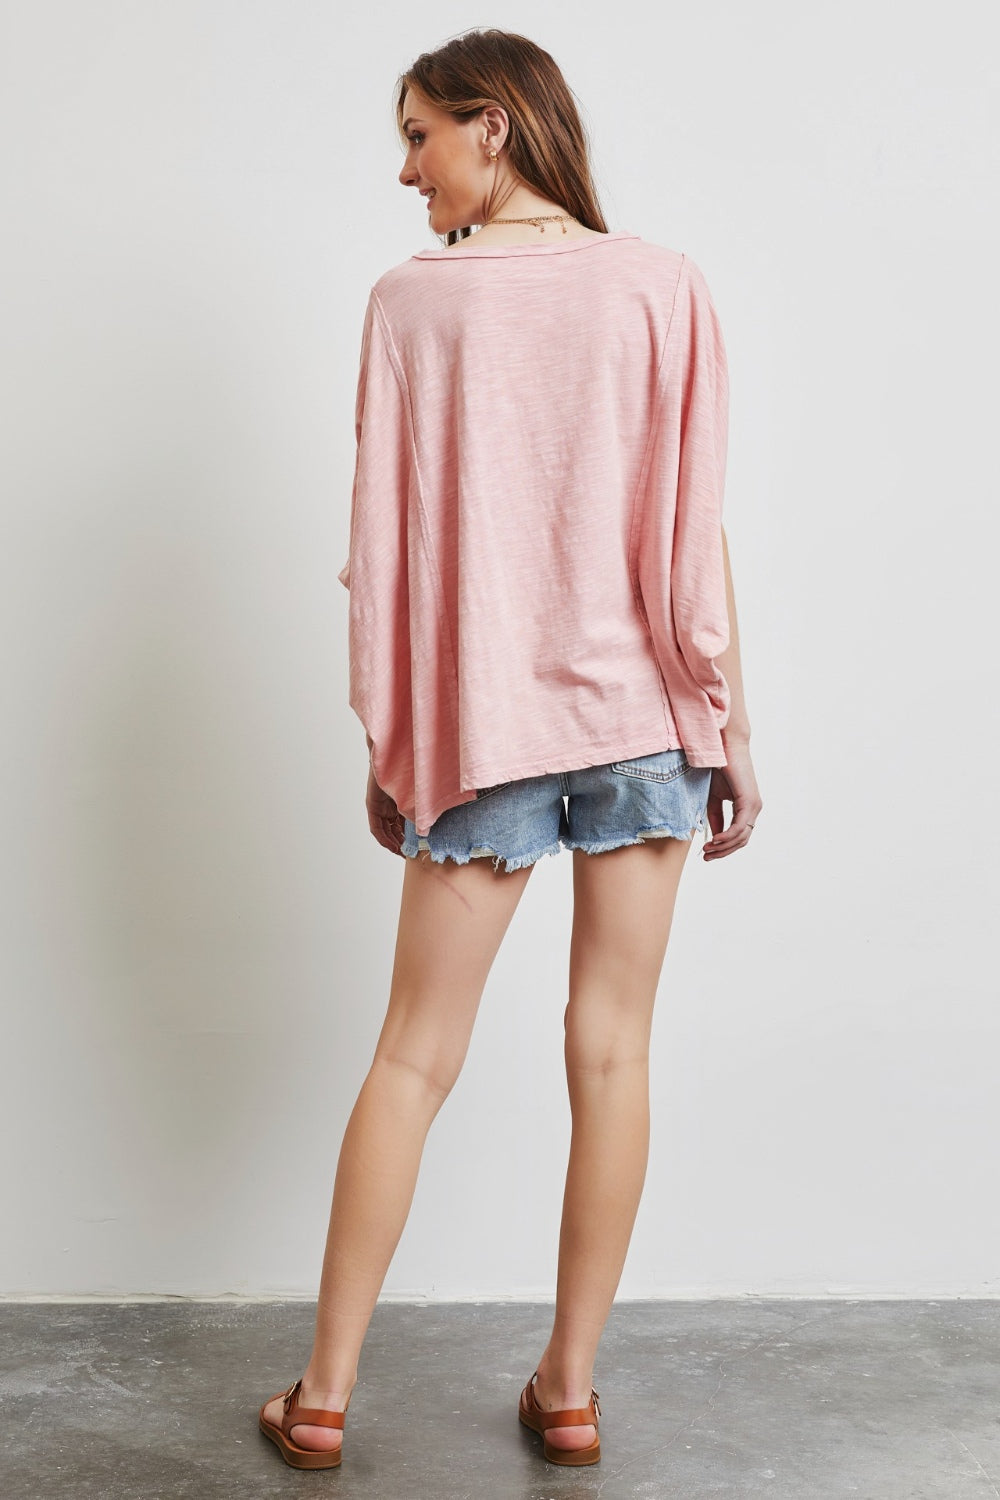 Baggy T Shirt 100% Designer Luxury Fashion Women's Short Sleeve Oversized Top